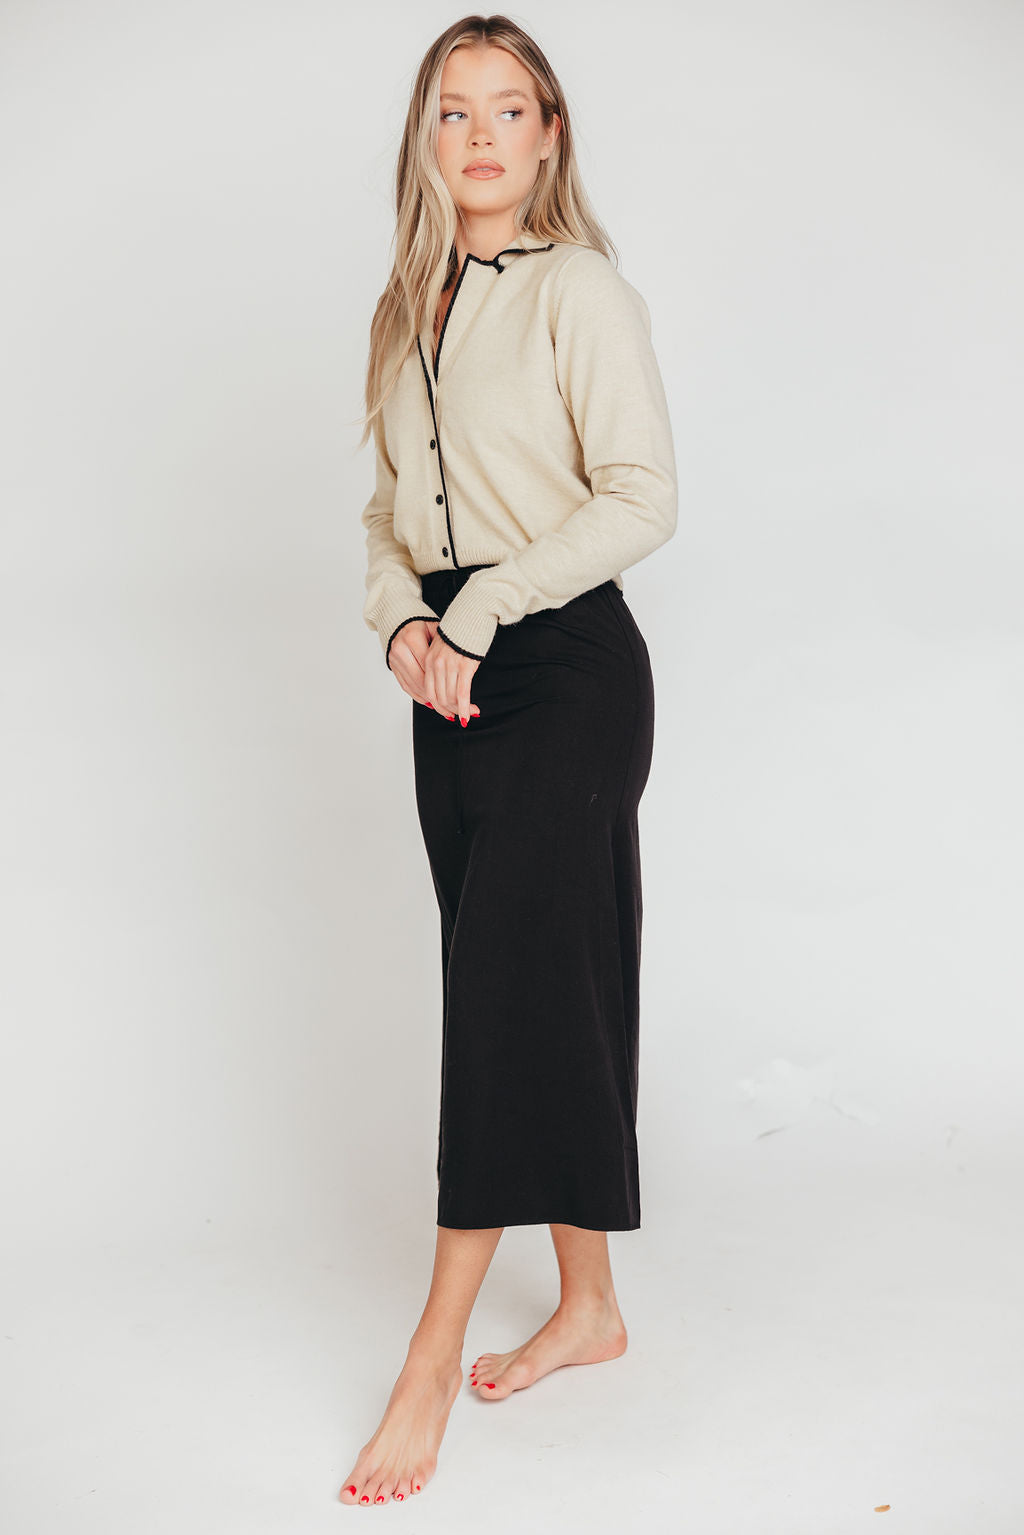 The Talia Maxi Skirt in Black